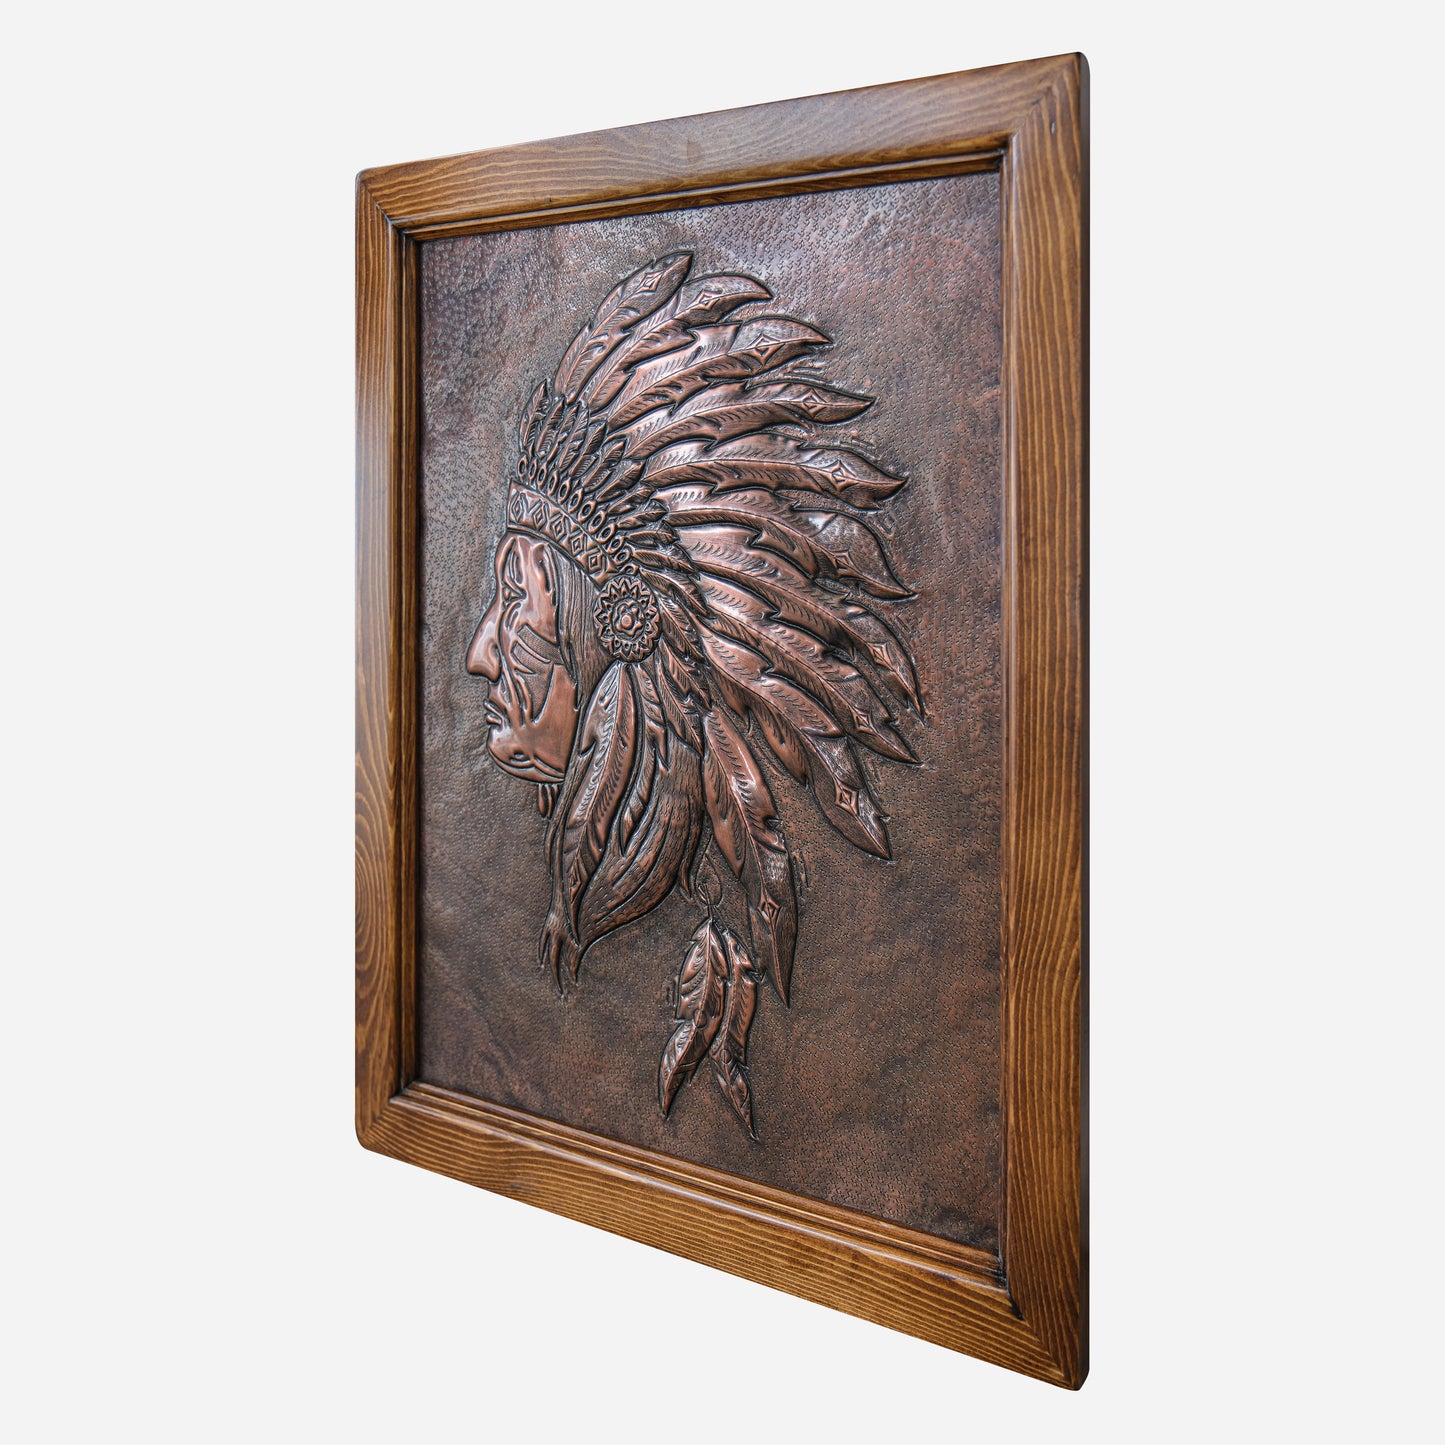 Framed Copper Artwork (Native-American)